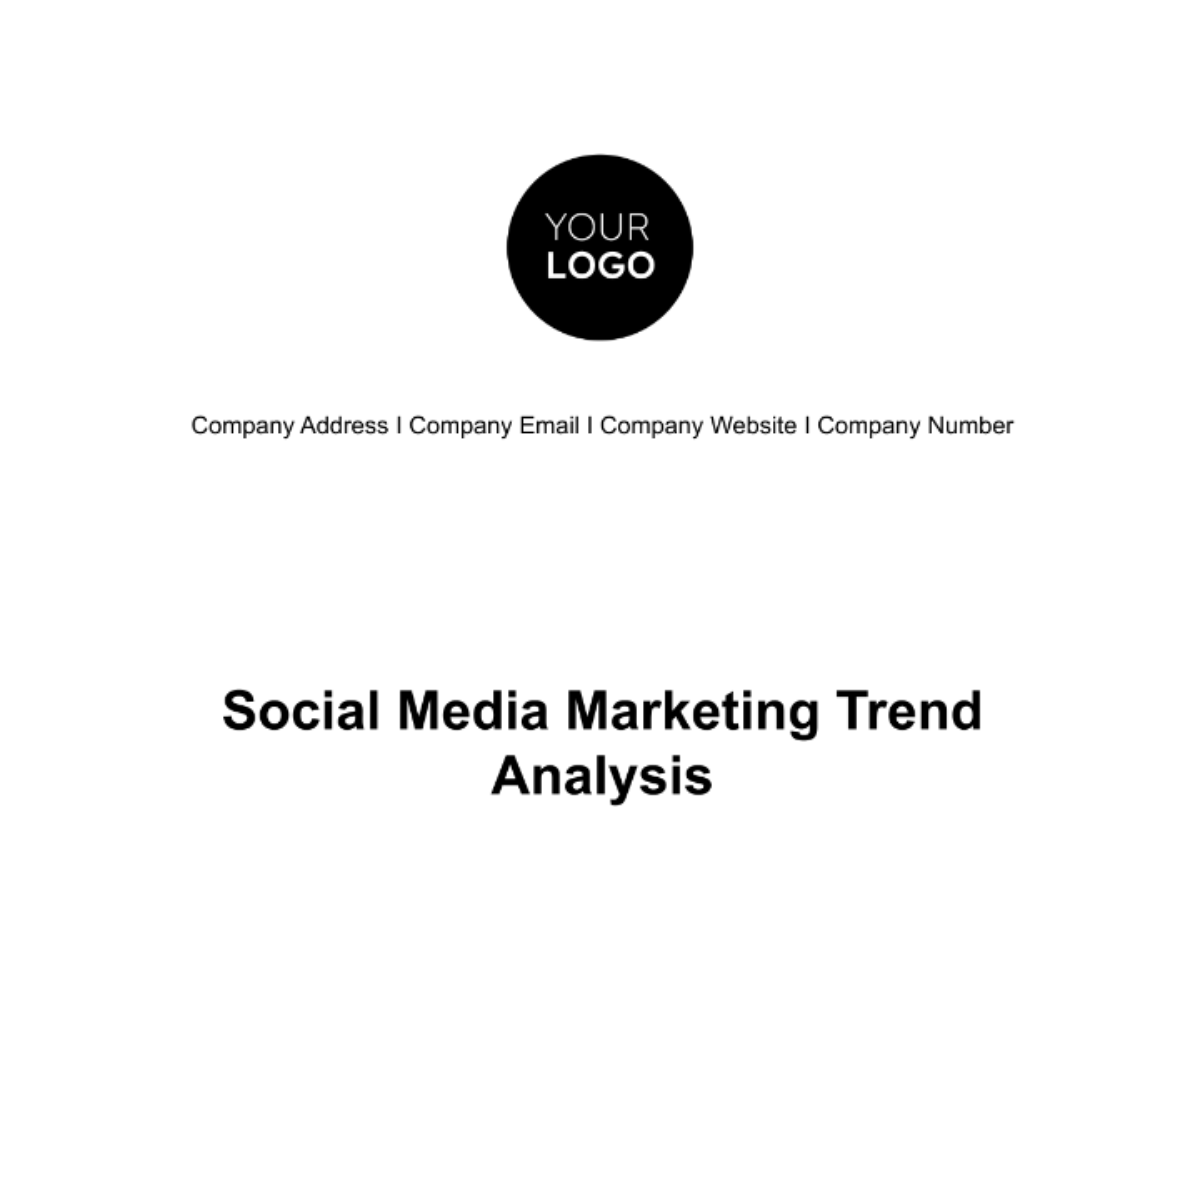 Social Media Marketing Trend Analysis Template